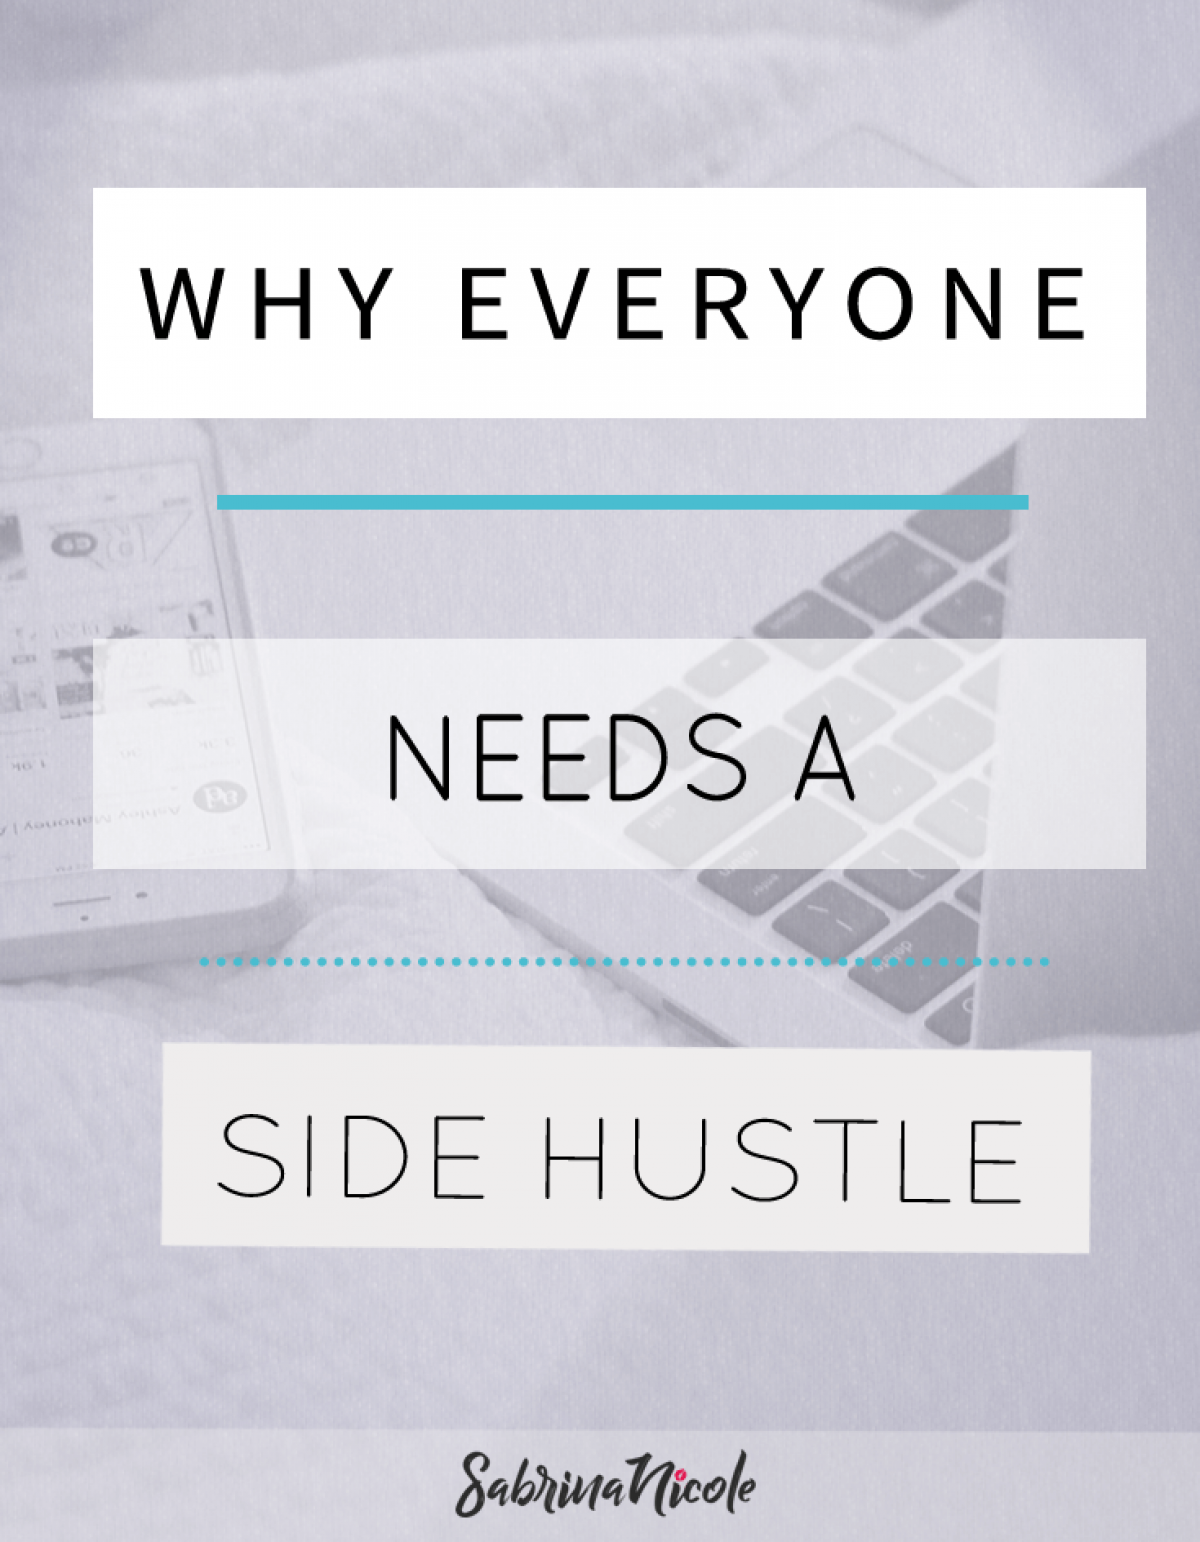 Why everyone needs a side hustle